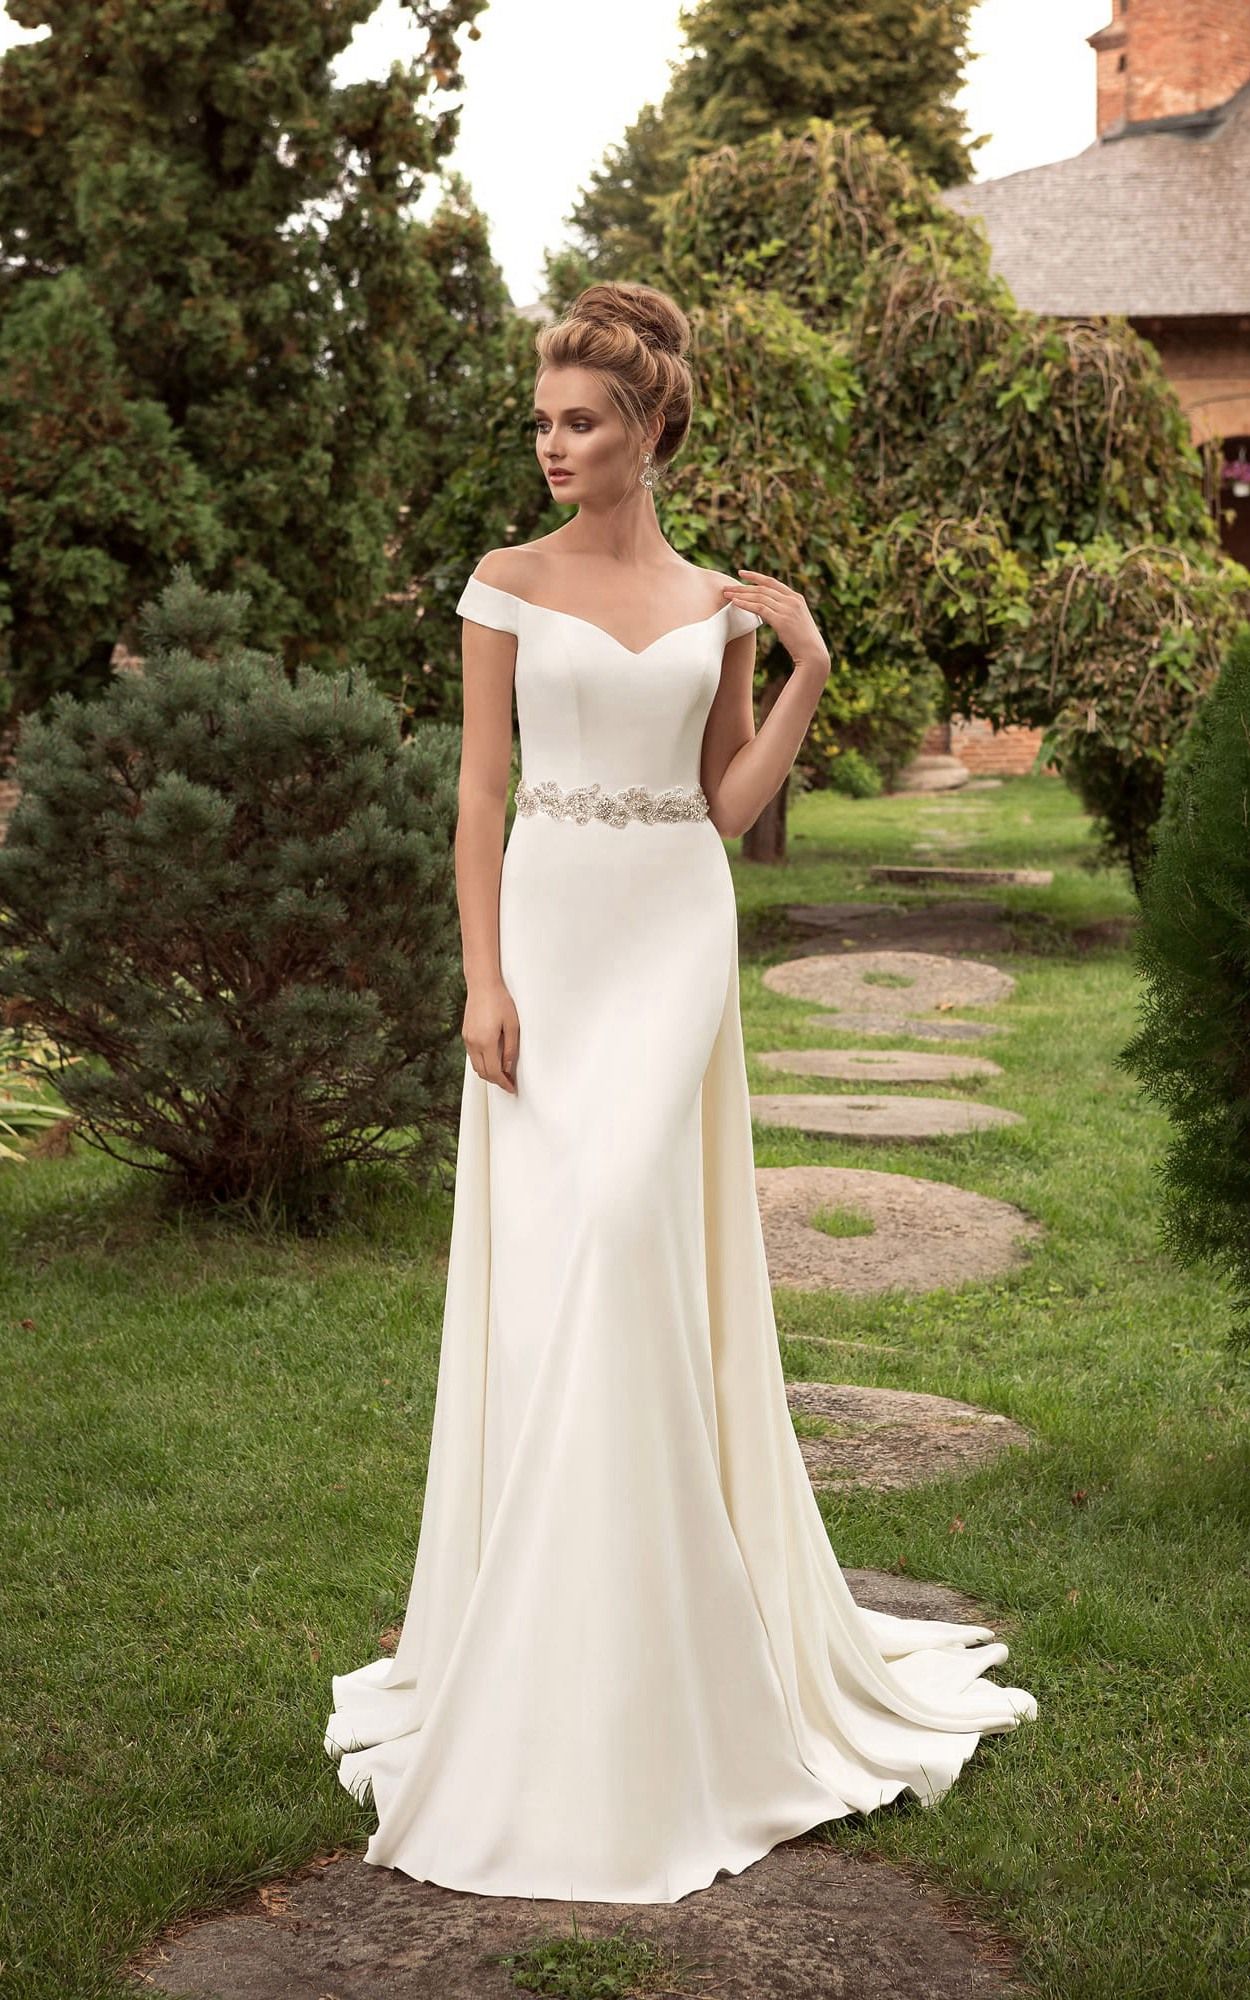 Minimalistic open shoulders wedding dress